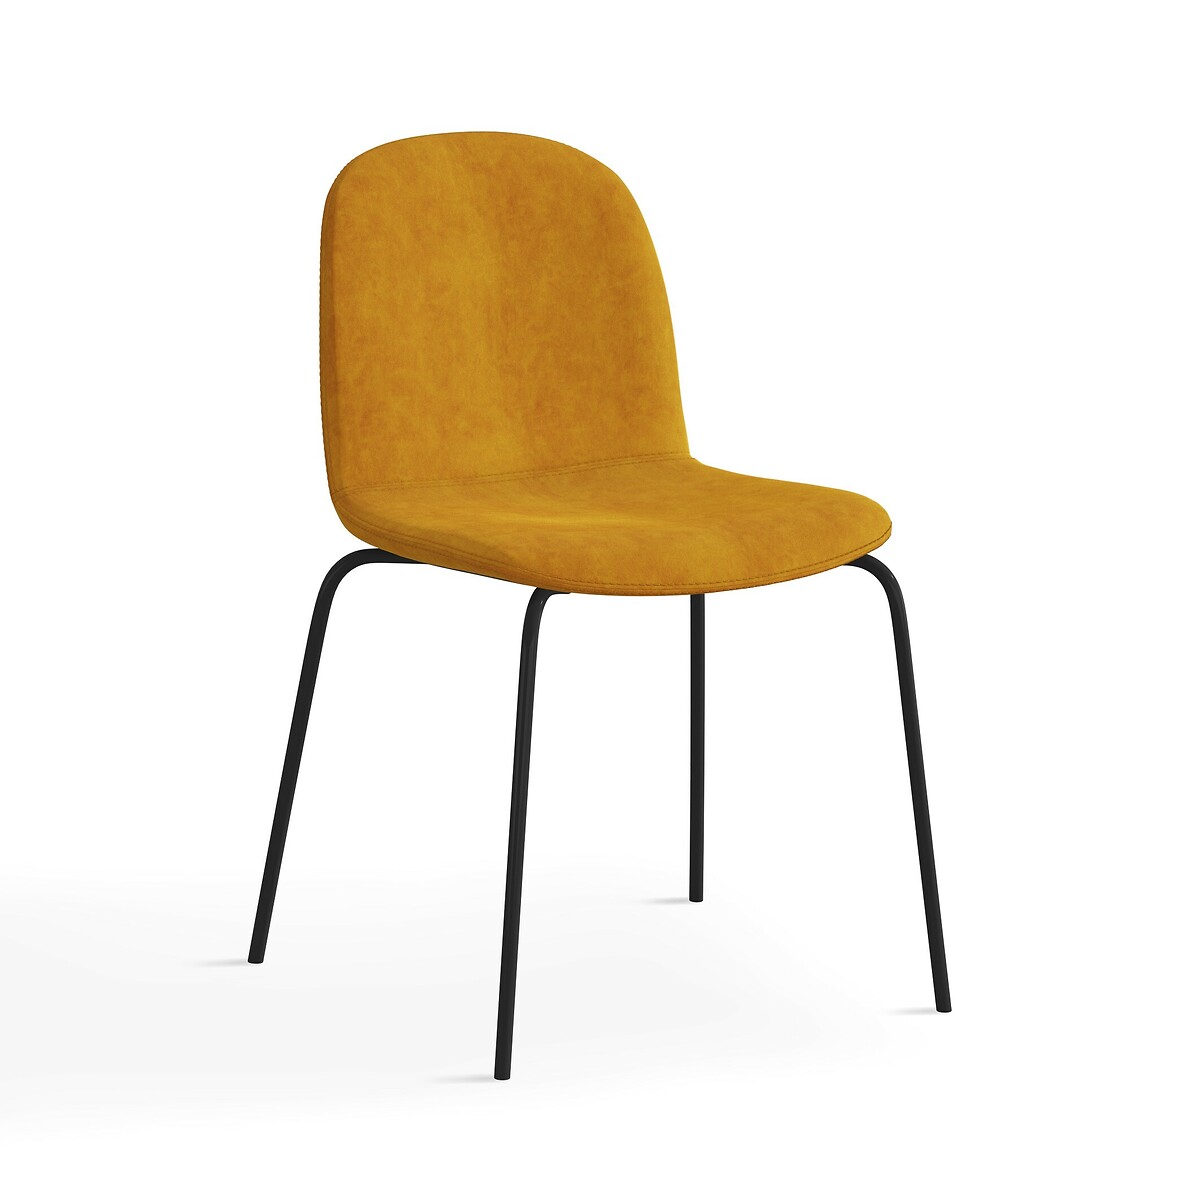 Стул из велюра Tibby единый размер желтый стул с фланелевым покрытием tibby единый размер серый